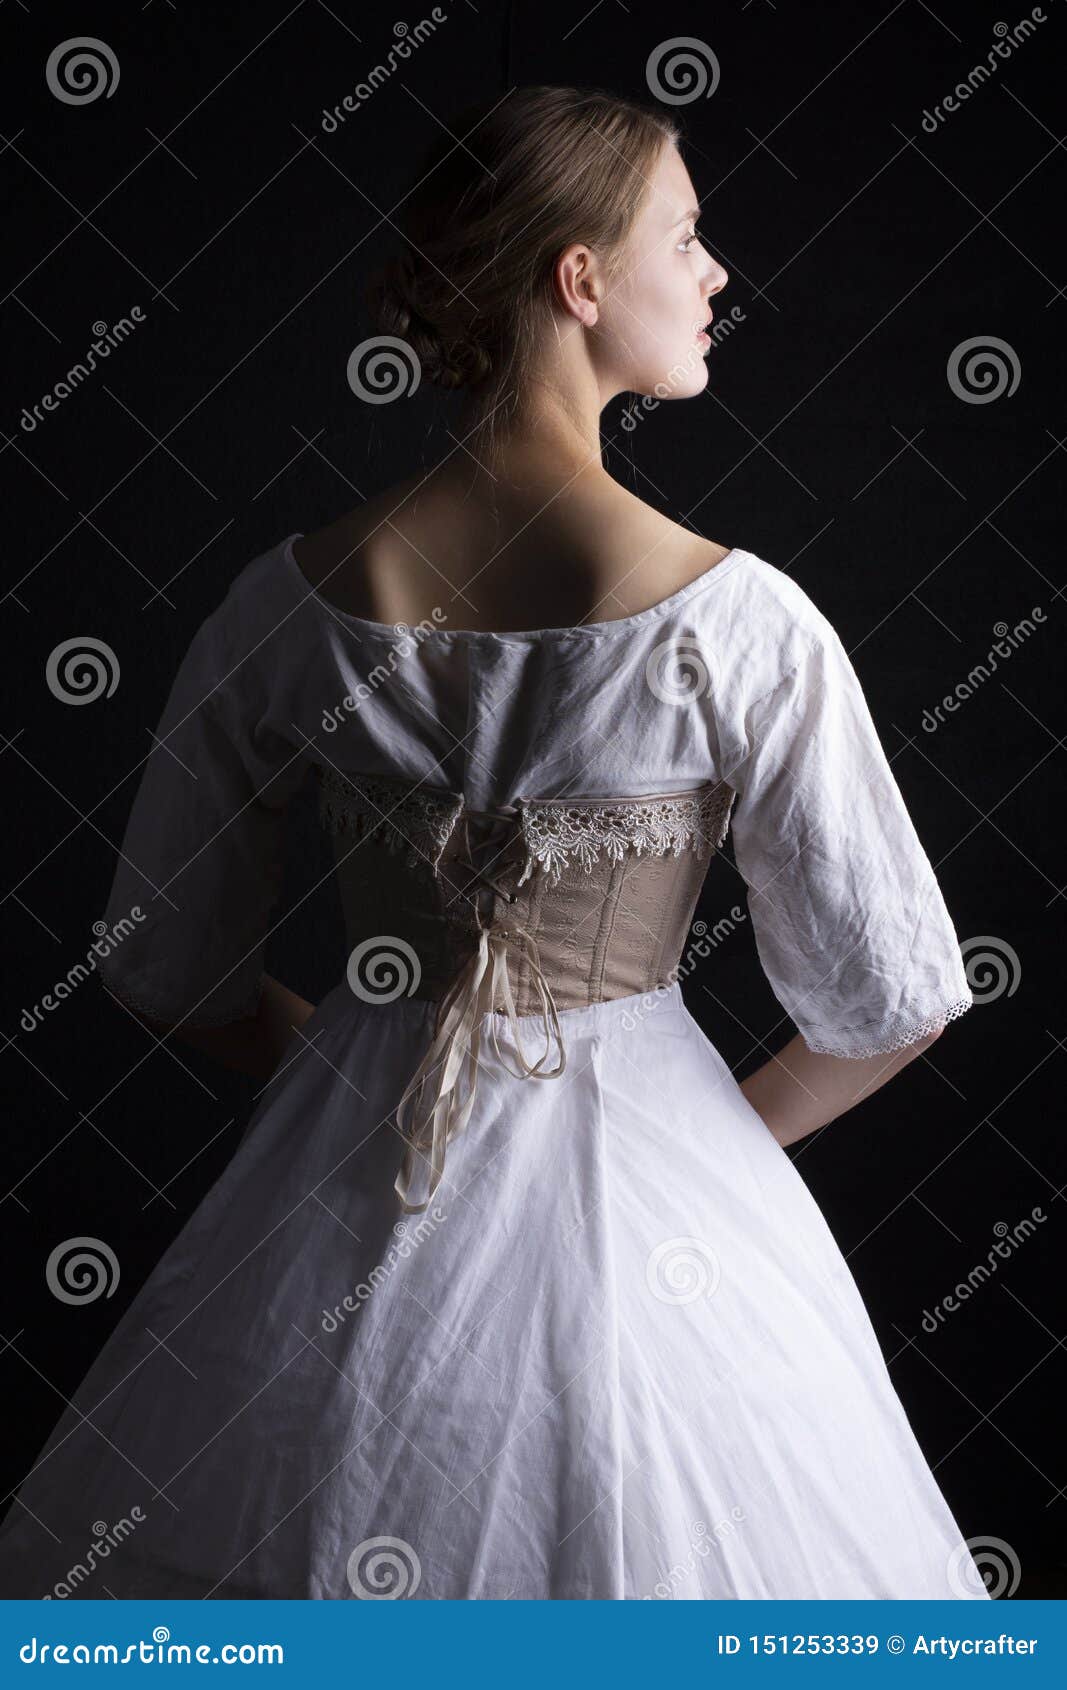 Victorian Woman in Underwear Stock Image - Image of book, century: 151253339